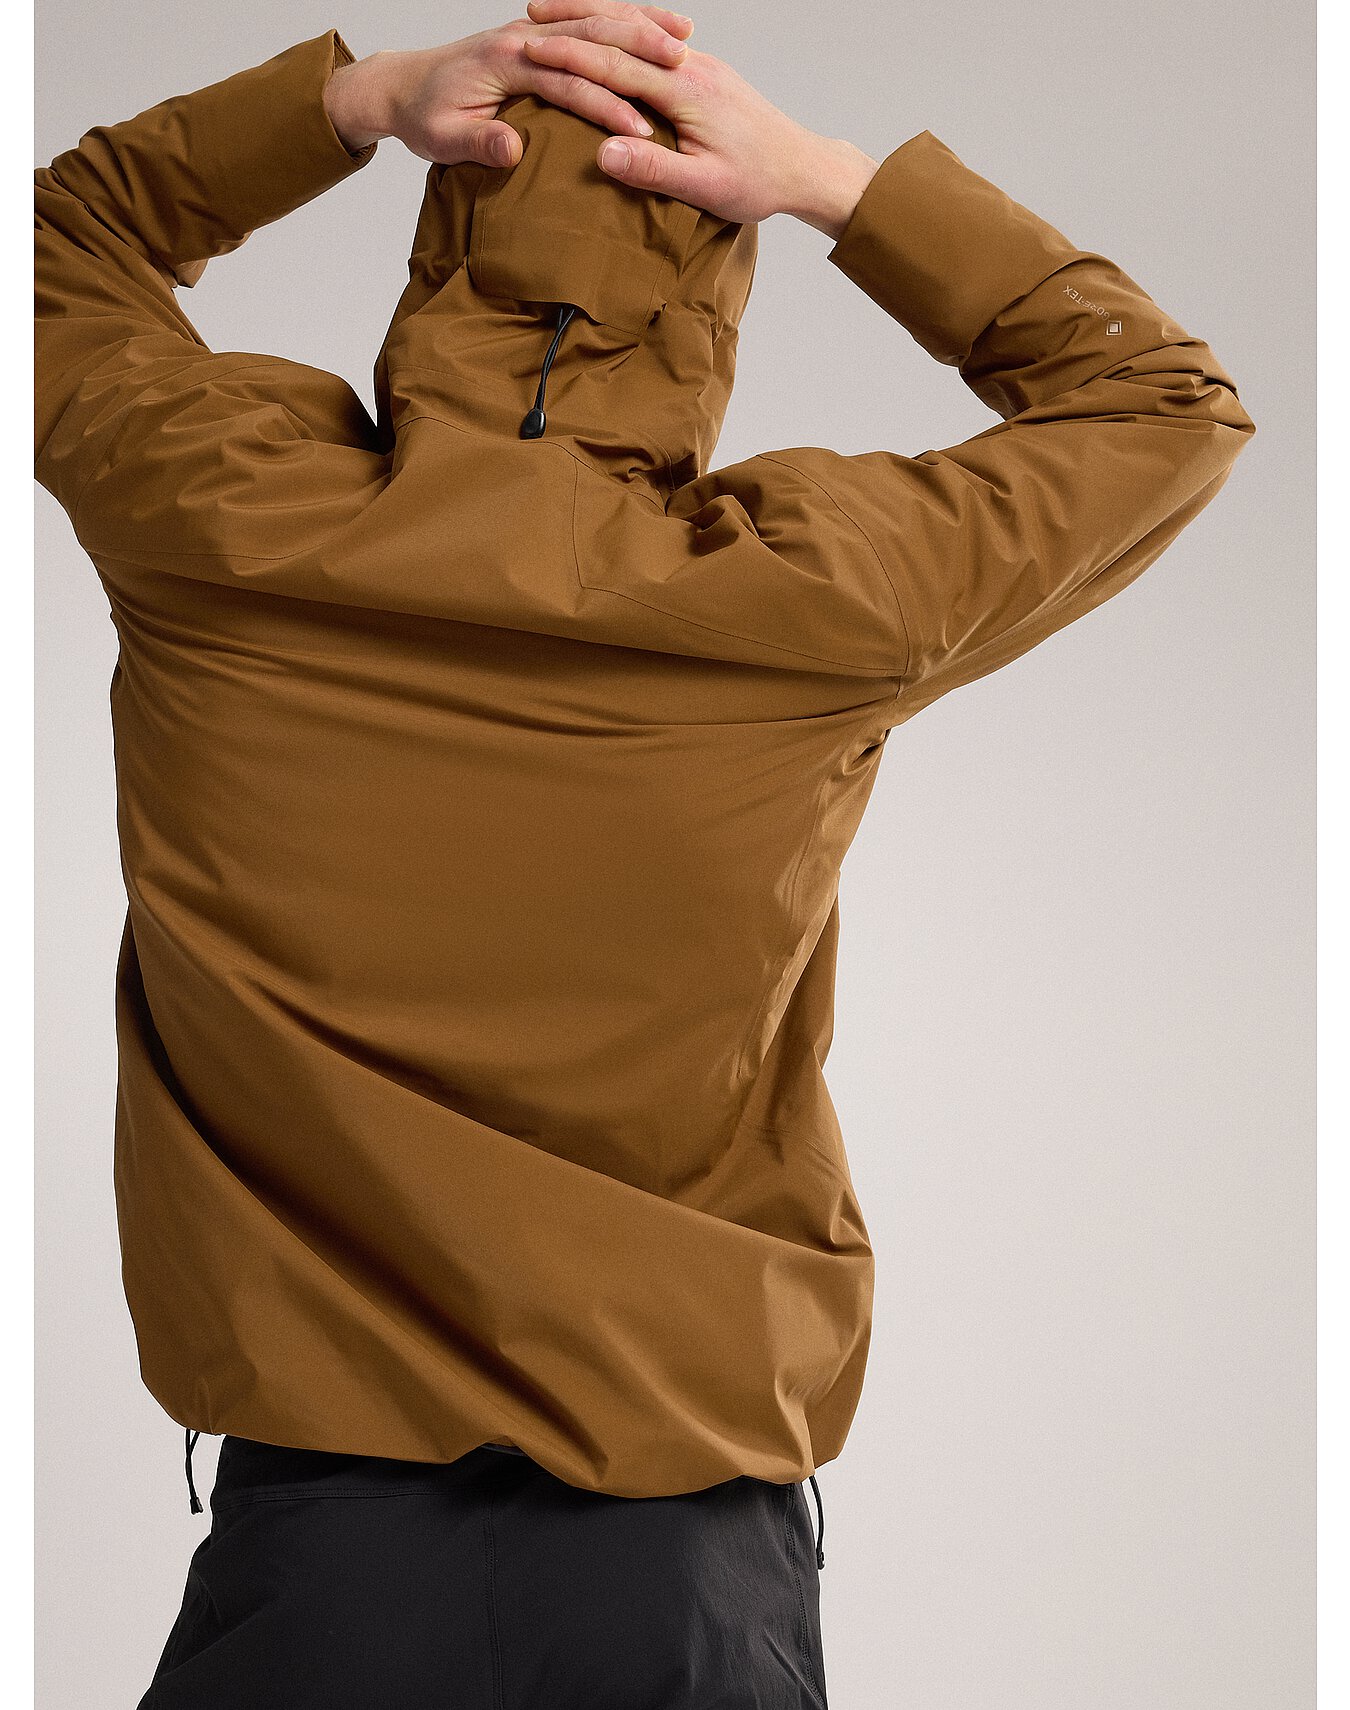 Ralle Insulated Jacket Men's | Arc'teryx